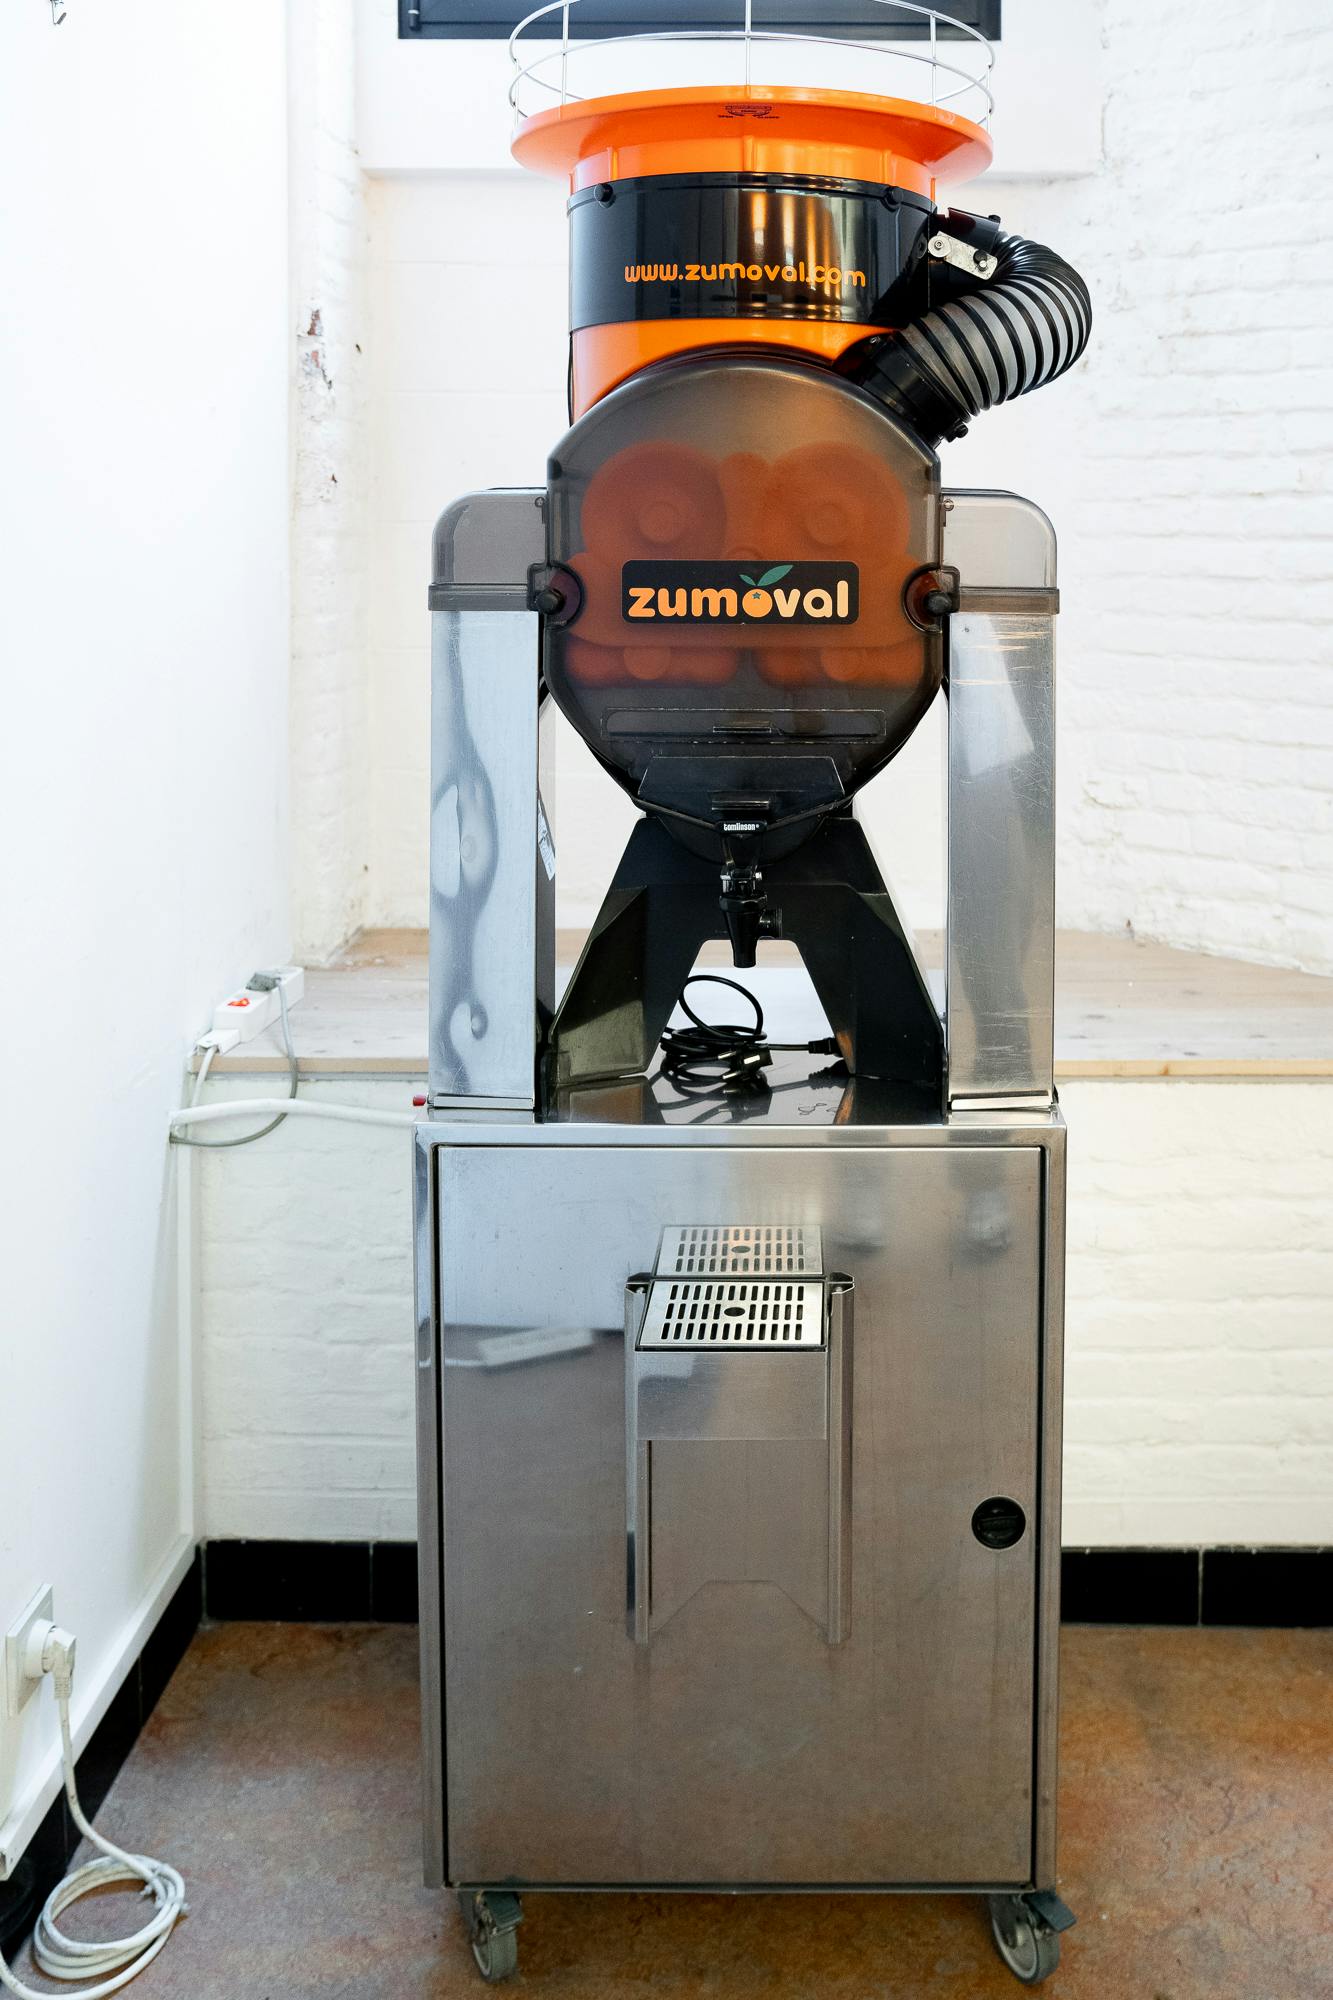 Orange juice machine Zumoval - Second hand quality "Miscellaneous" - Relieve Furniture